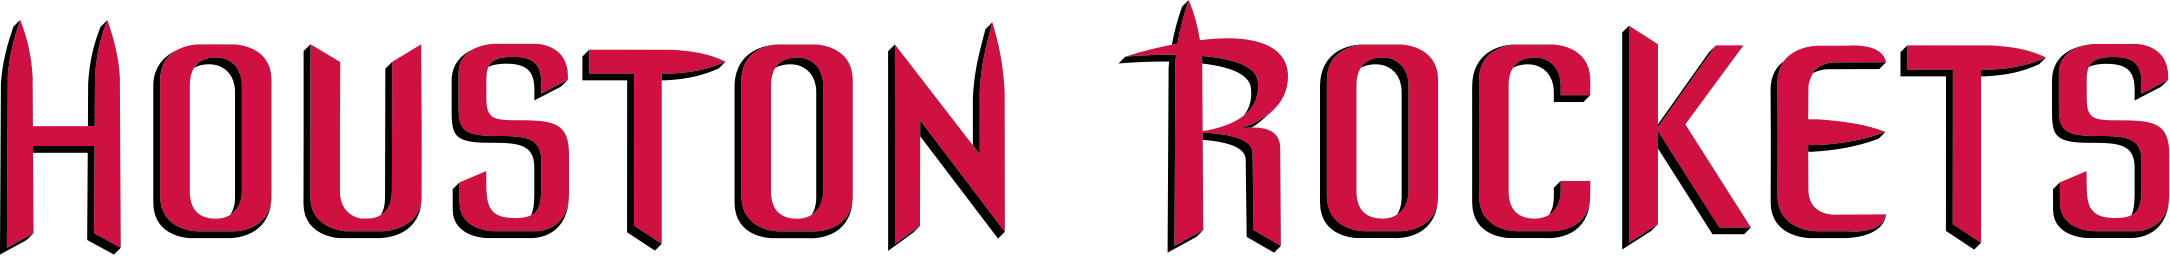 Nba Dot Com - Nba Houston Rockets 2-pack Magnet Set (2170x256)